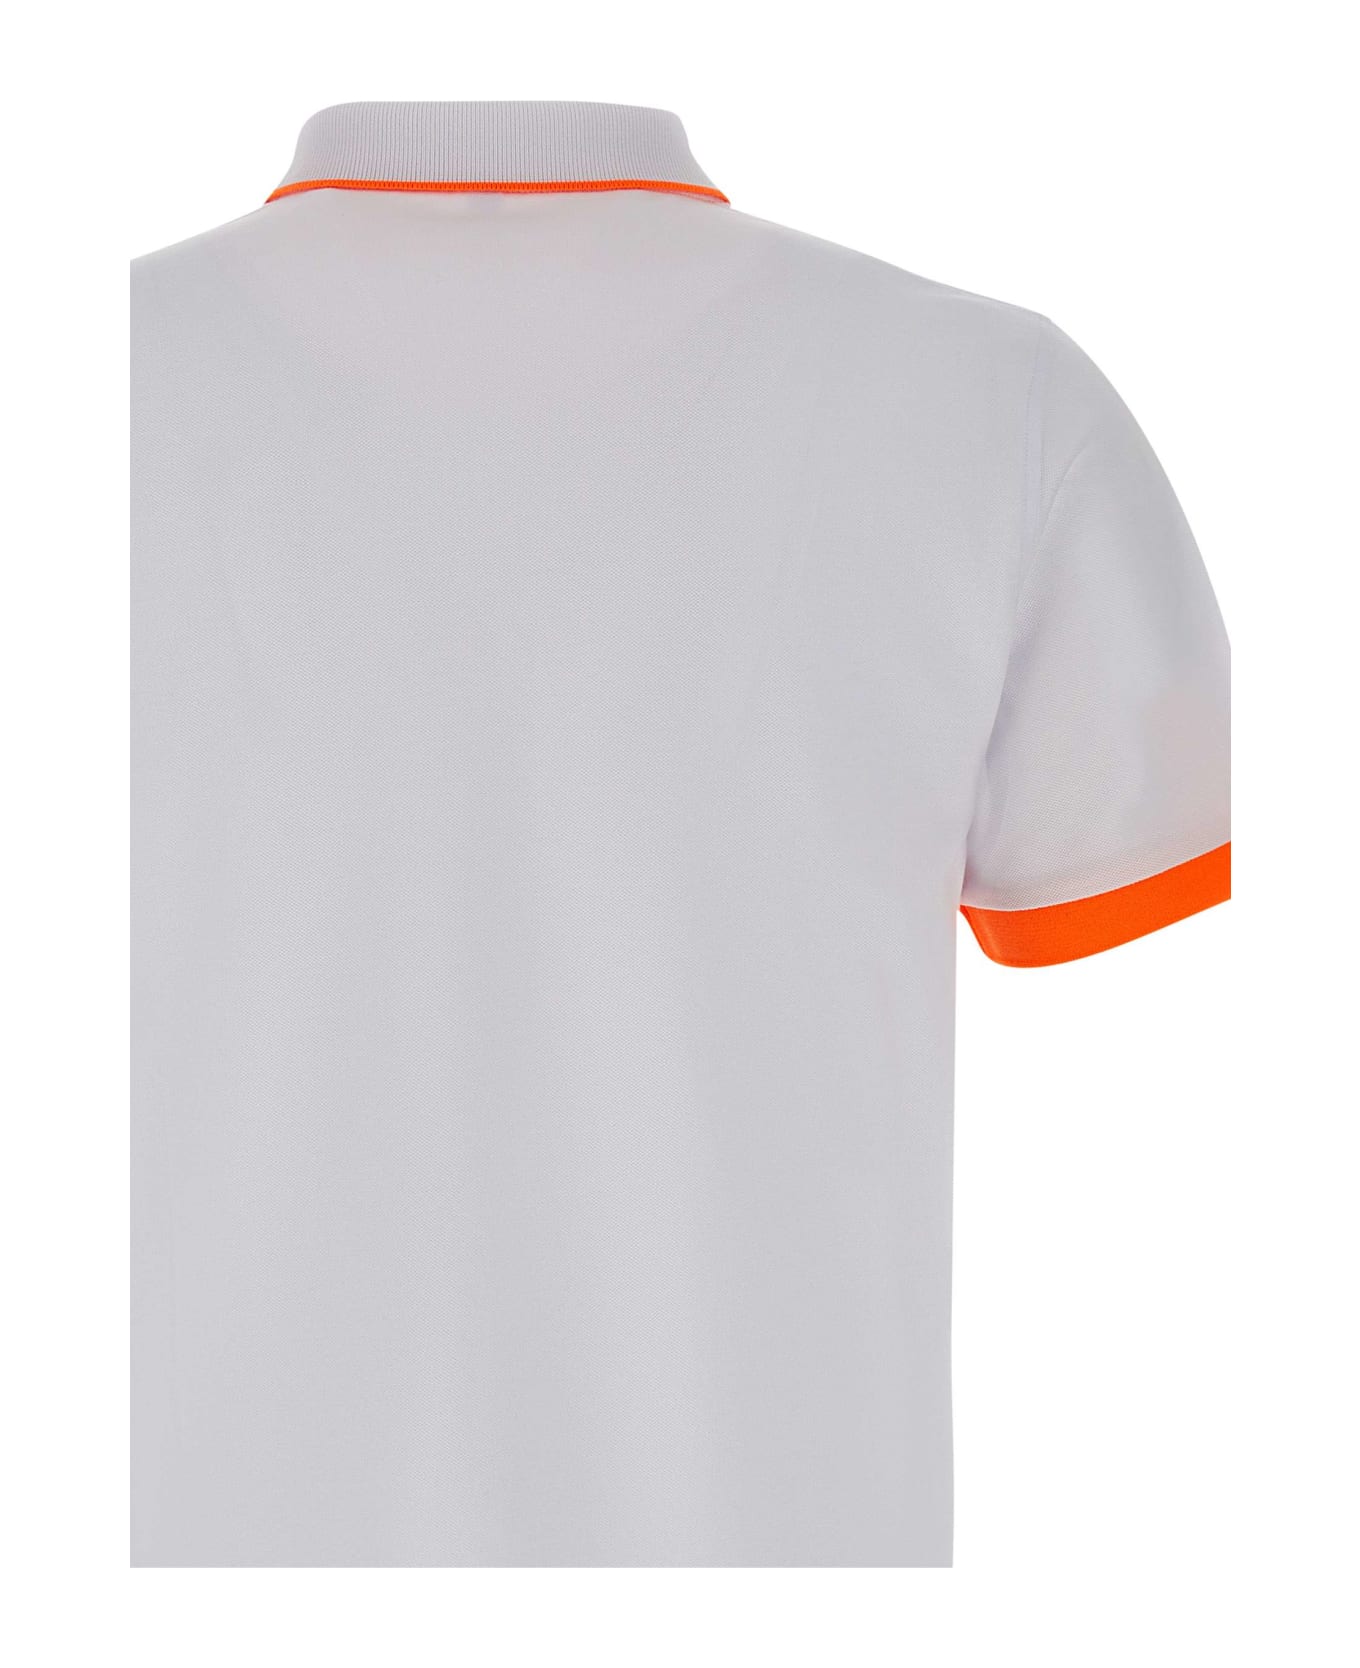 Sun 68 "small Stripe" Cotton Polo Shirt - WHITE ポロシャツ